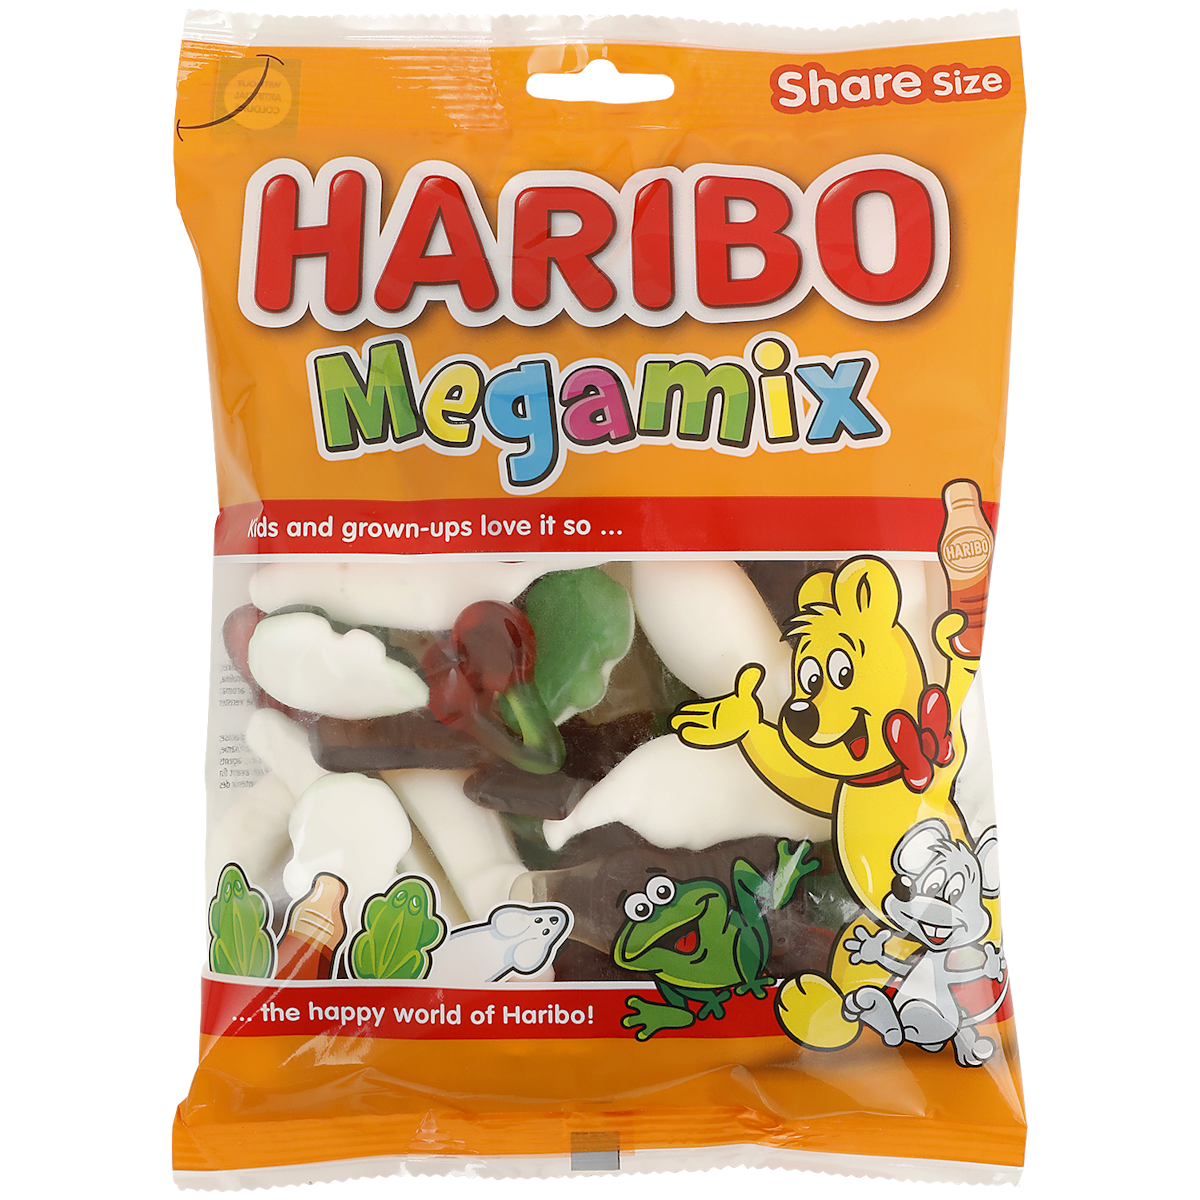 Haribo Megamix 